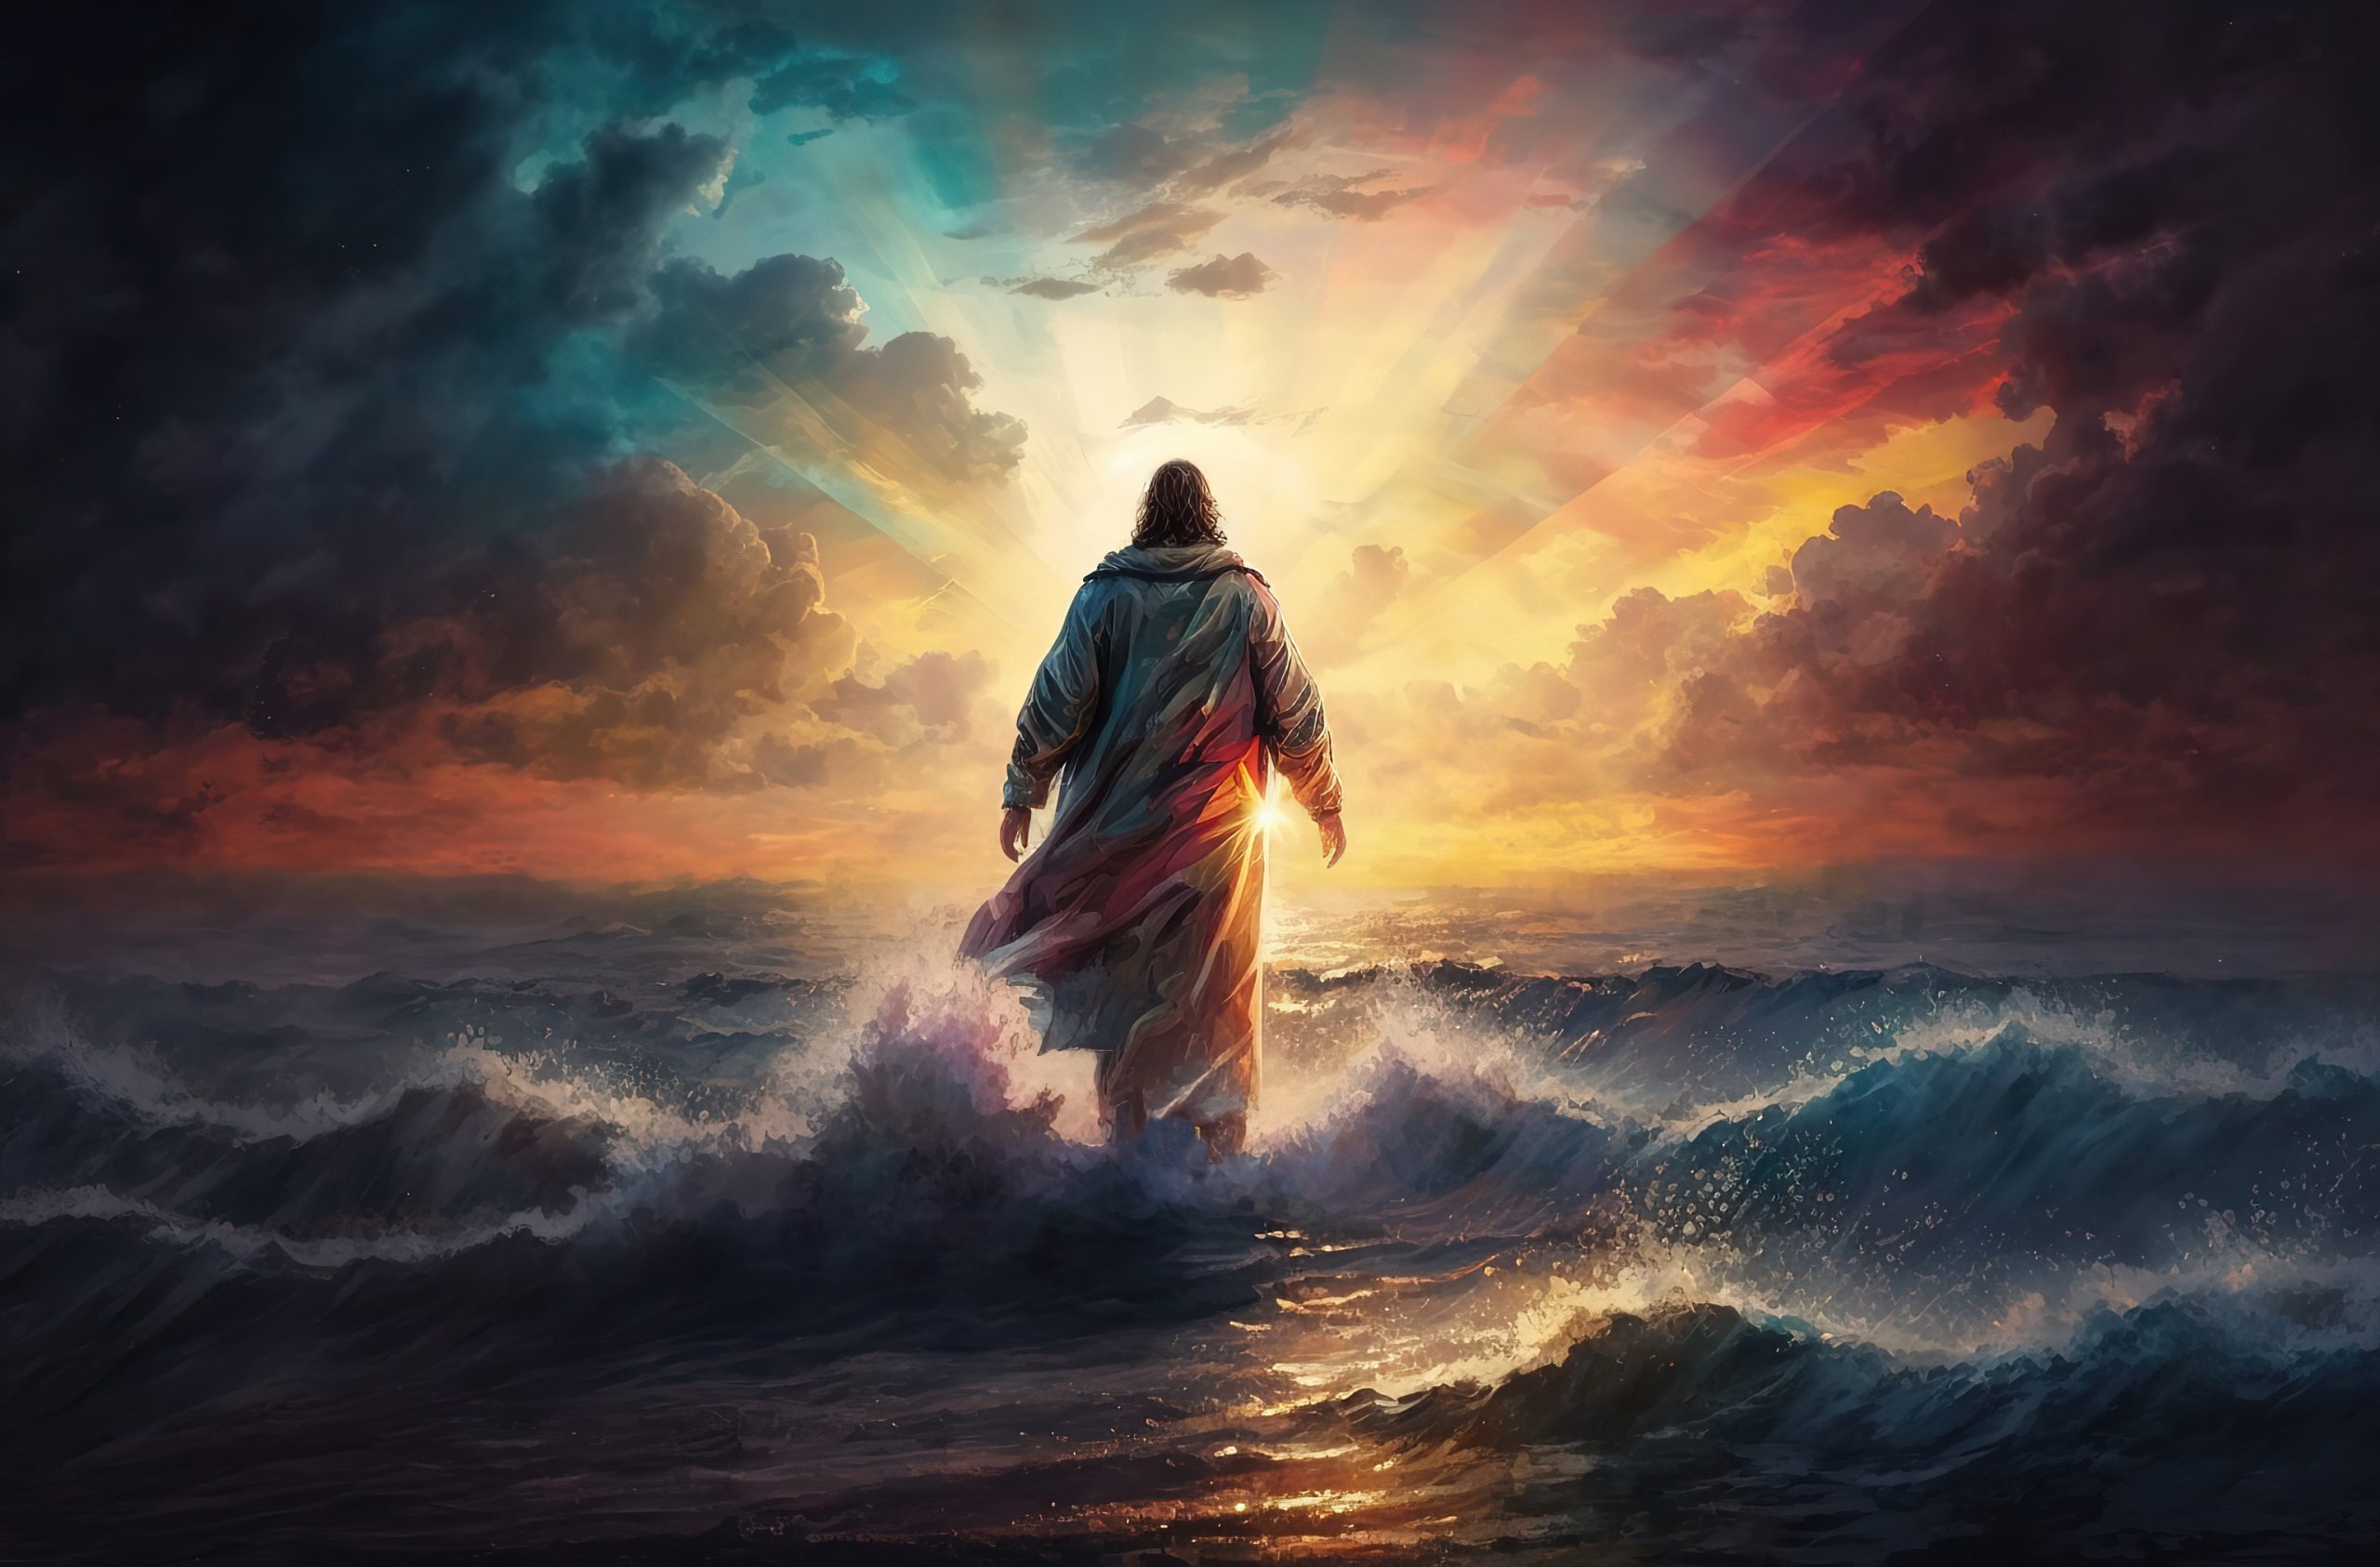 The figure of Jesus walks on water on a beautiful dramatic sunset